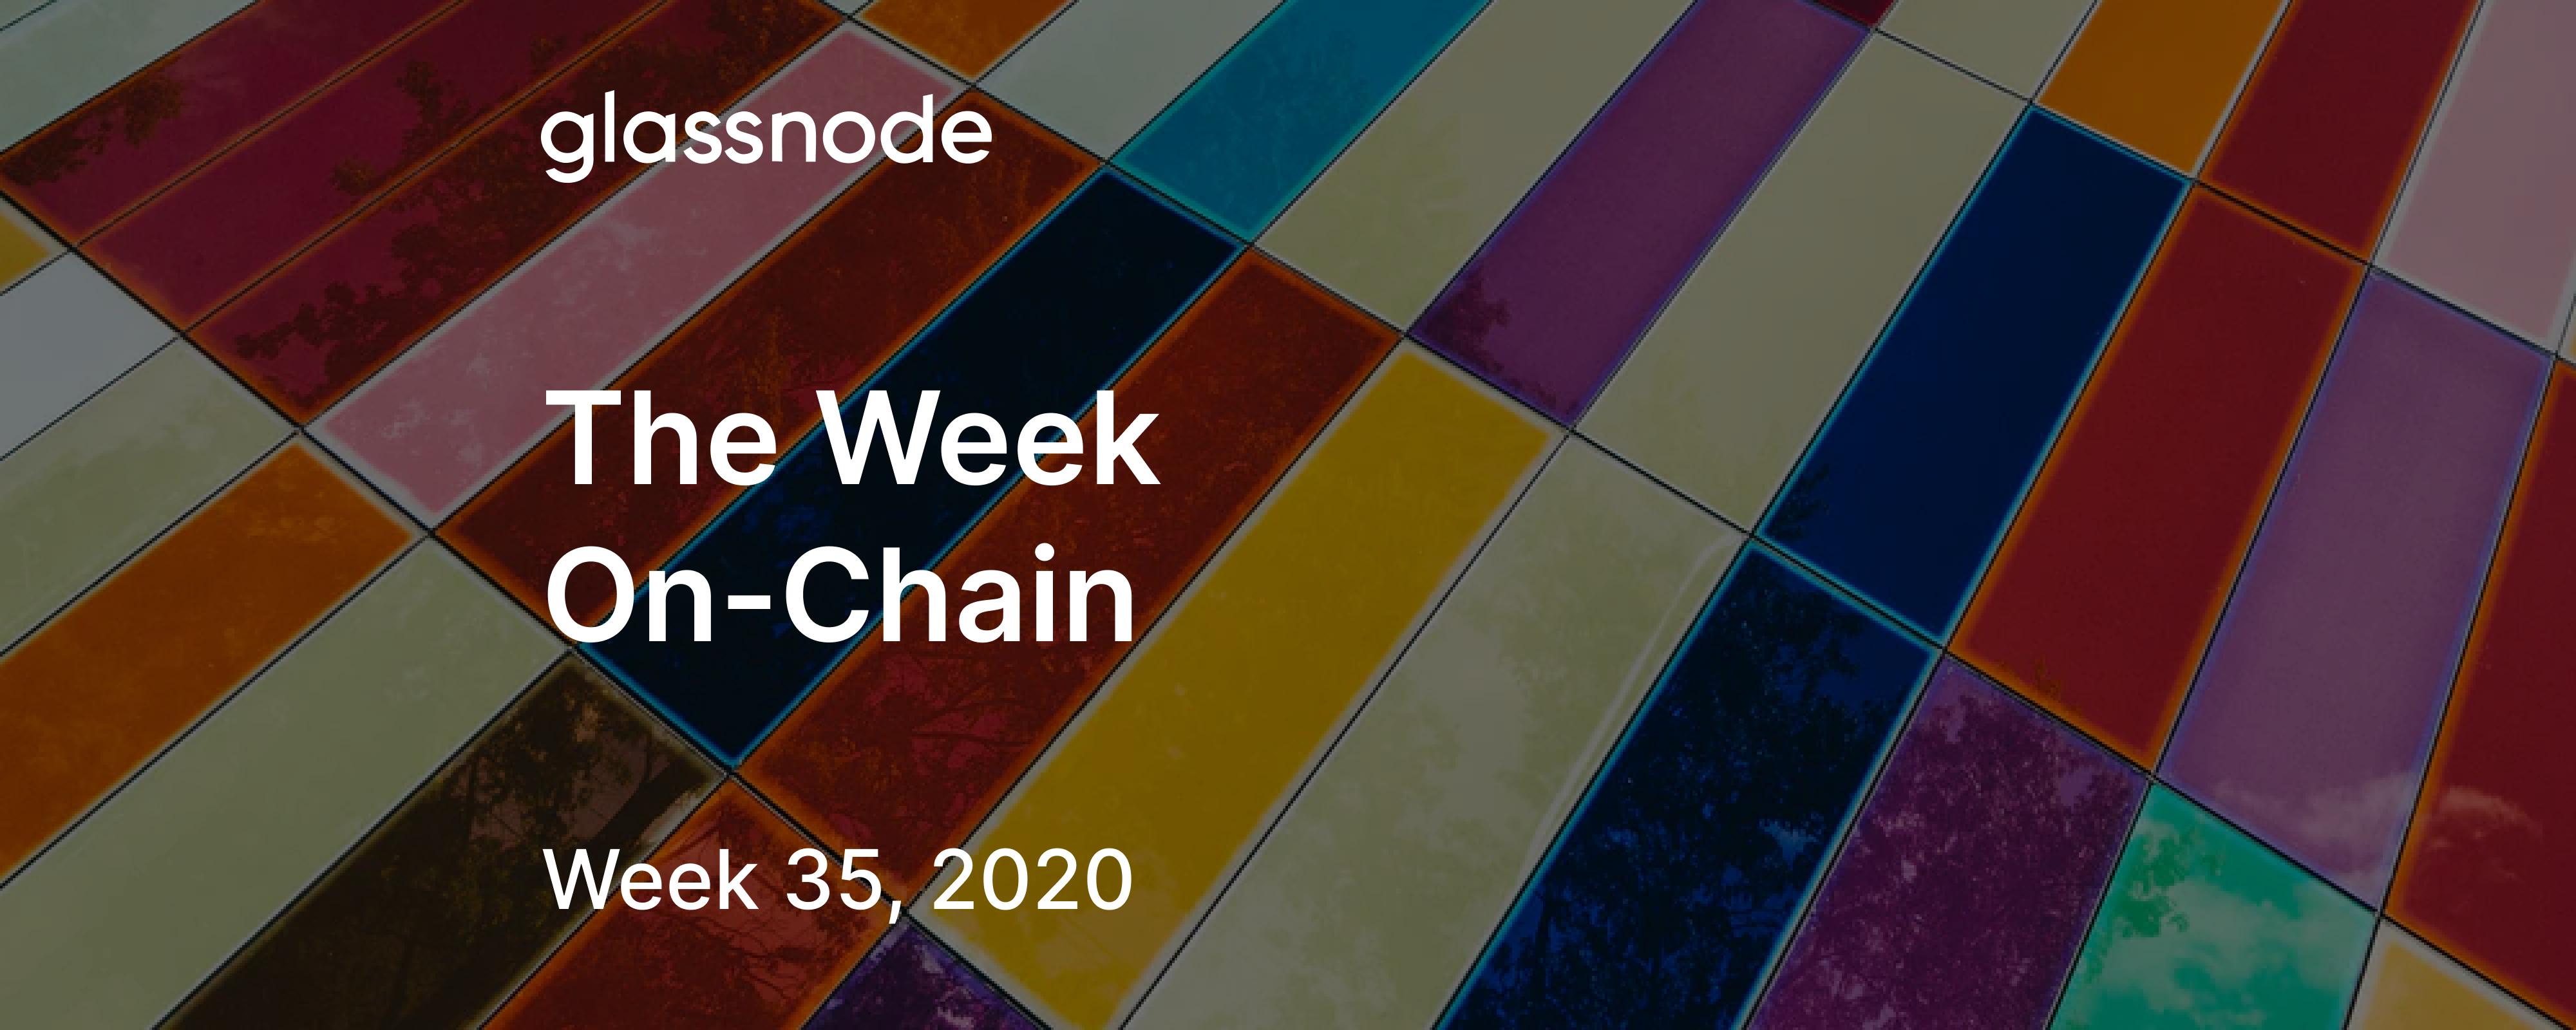 The Week On-Chain (Week 35, 2020)